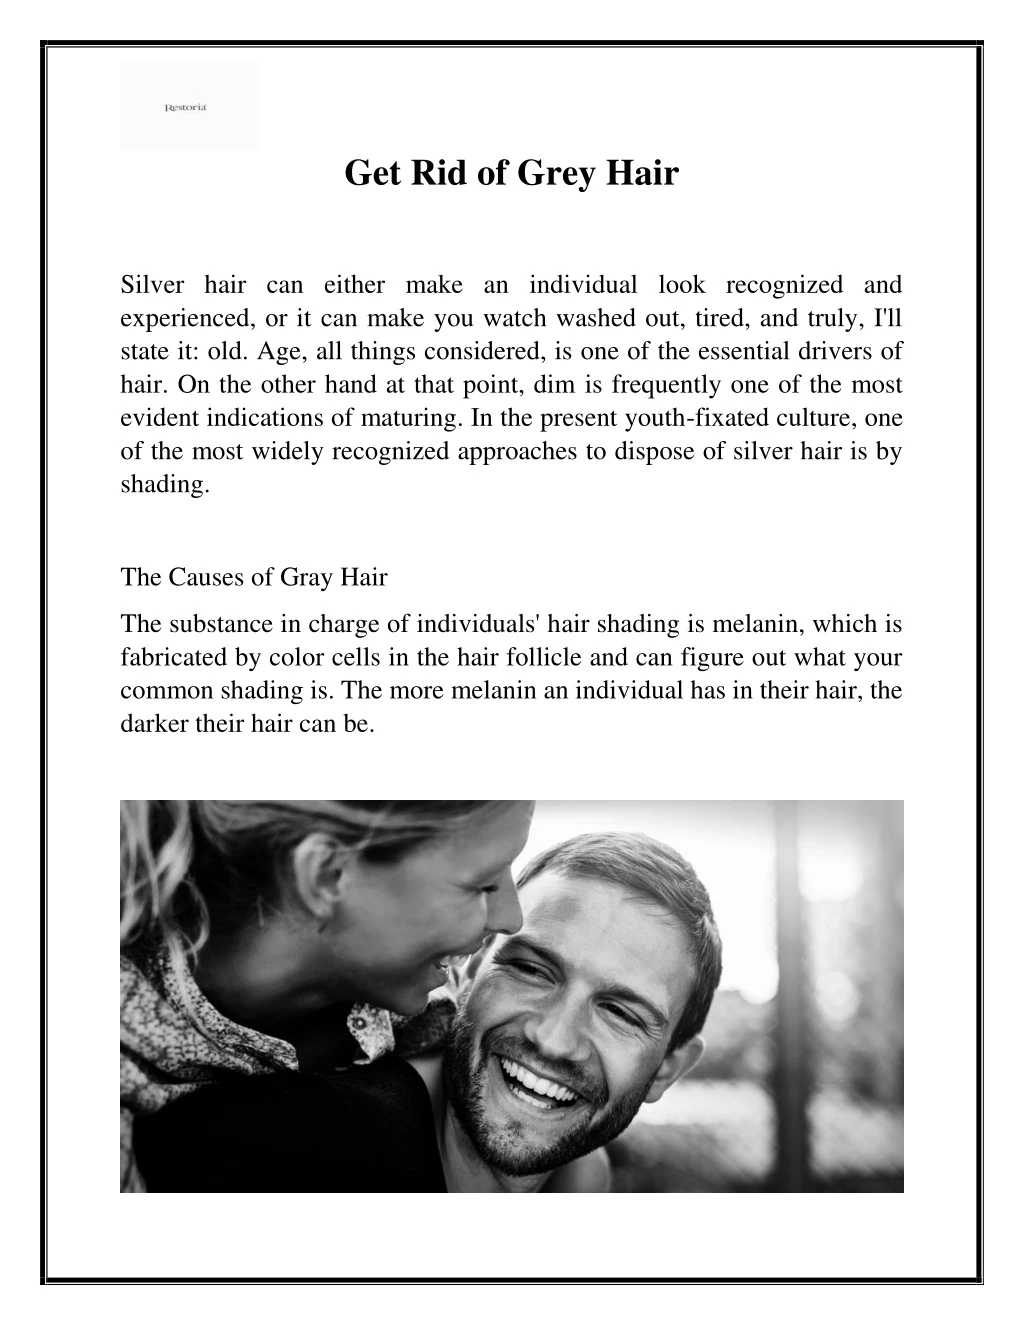 get rid of grey hair